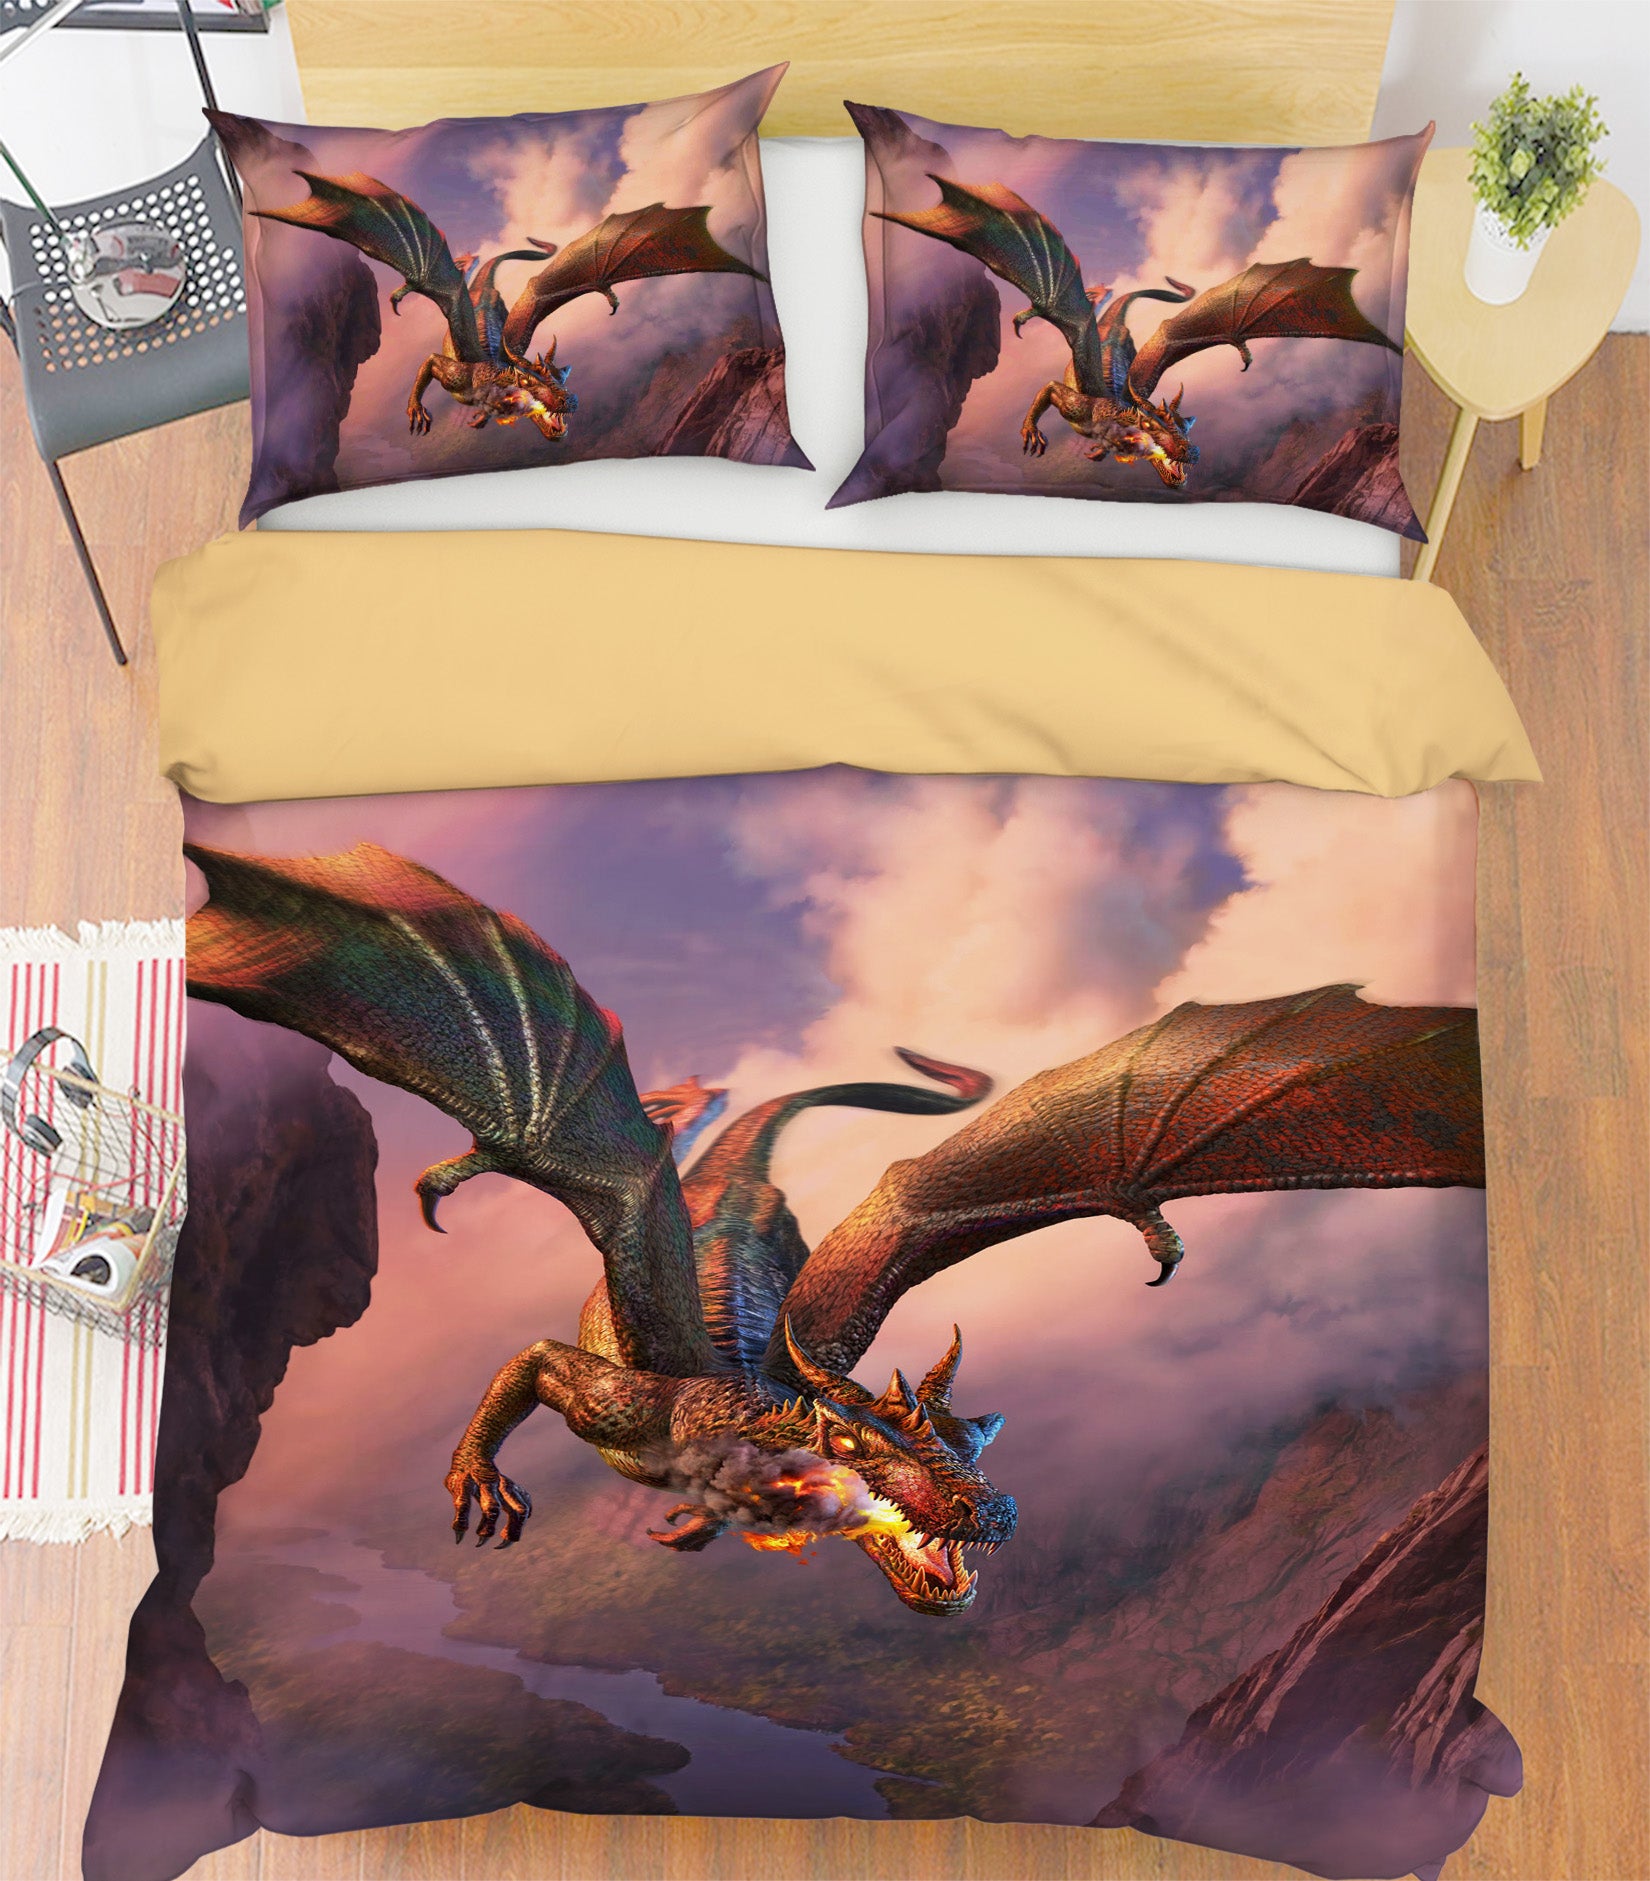 3D Fire Flight 2121 Jerry LoFaro bedding Bed Pillowcases Quilt